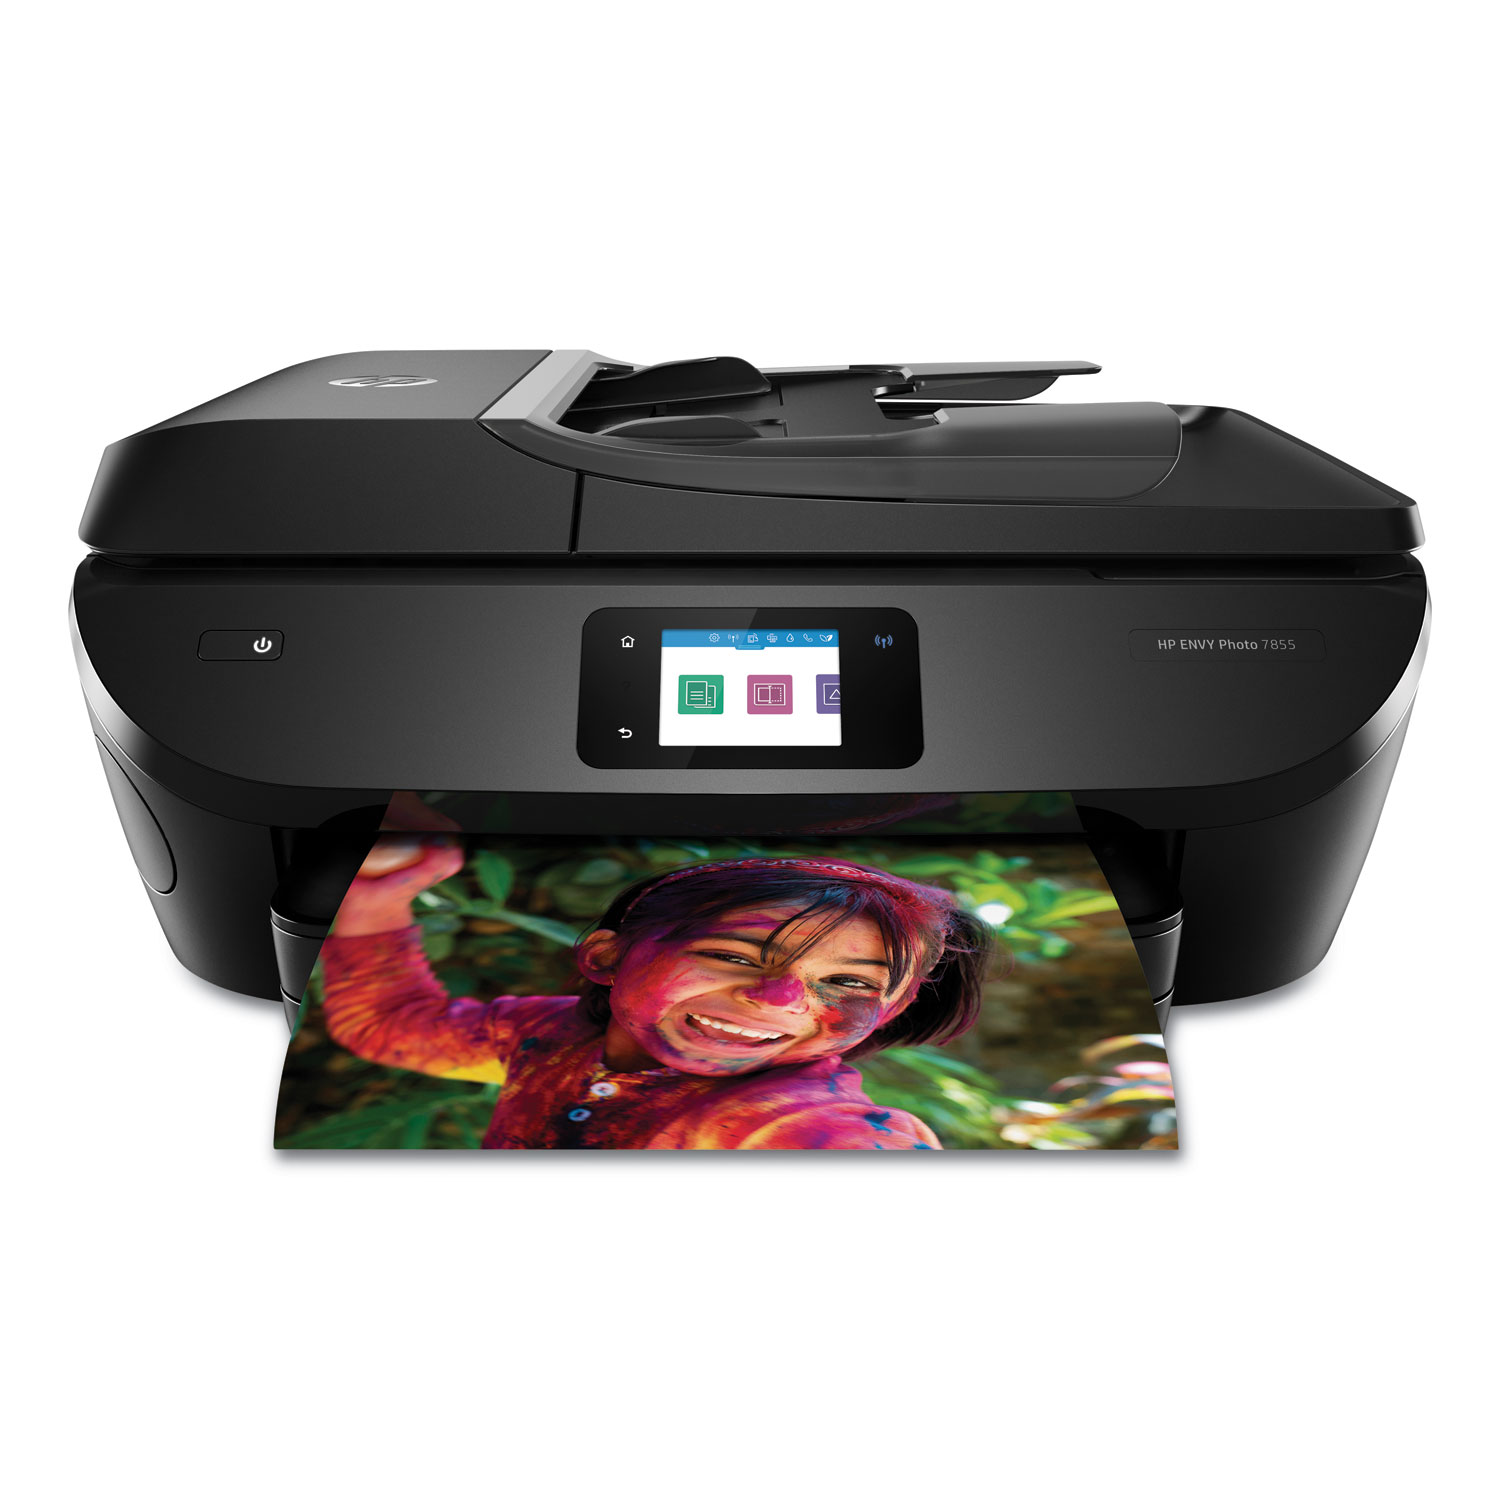  HP K7R96A#B1H ENVY Photo 7855 All-in-One Printer, Copy/Fax/Print/Scan (HEWK7R96A) 